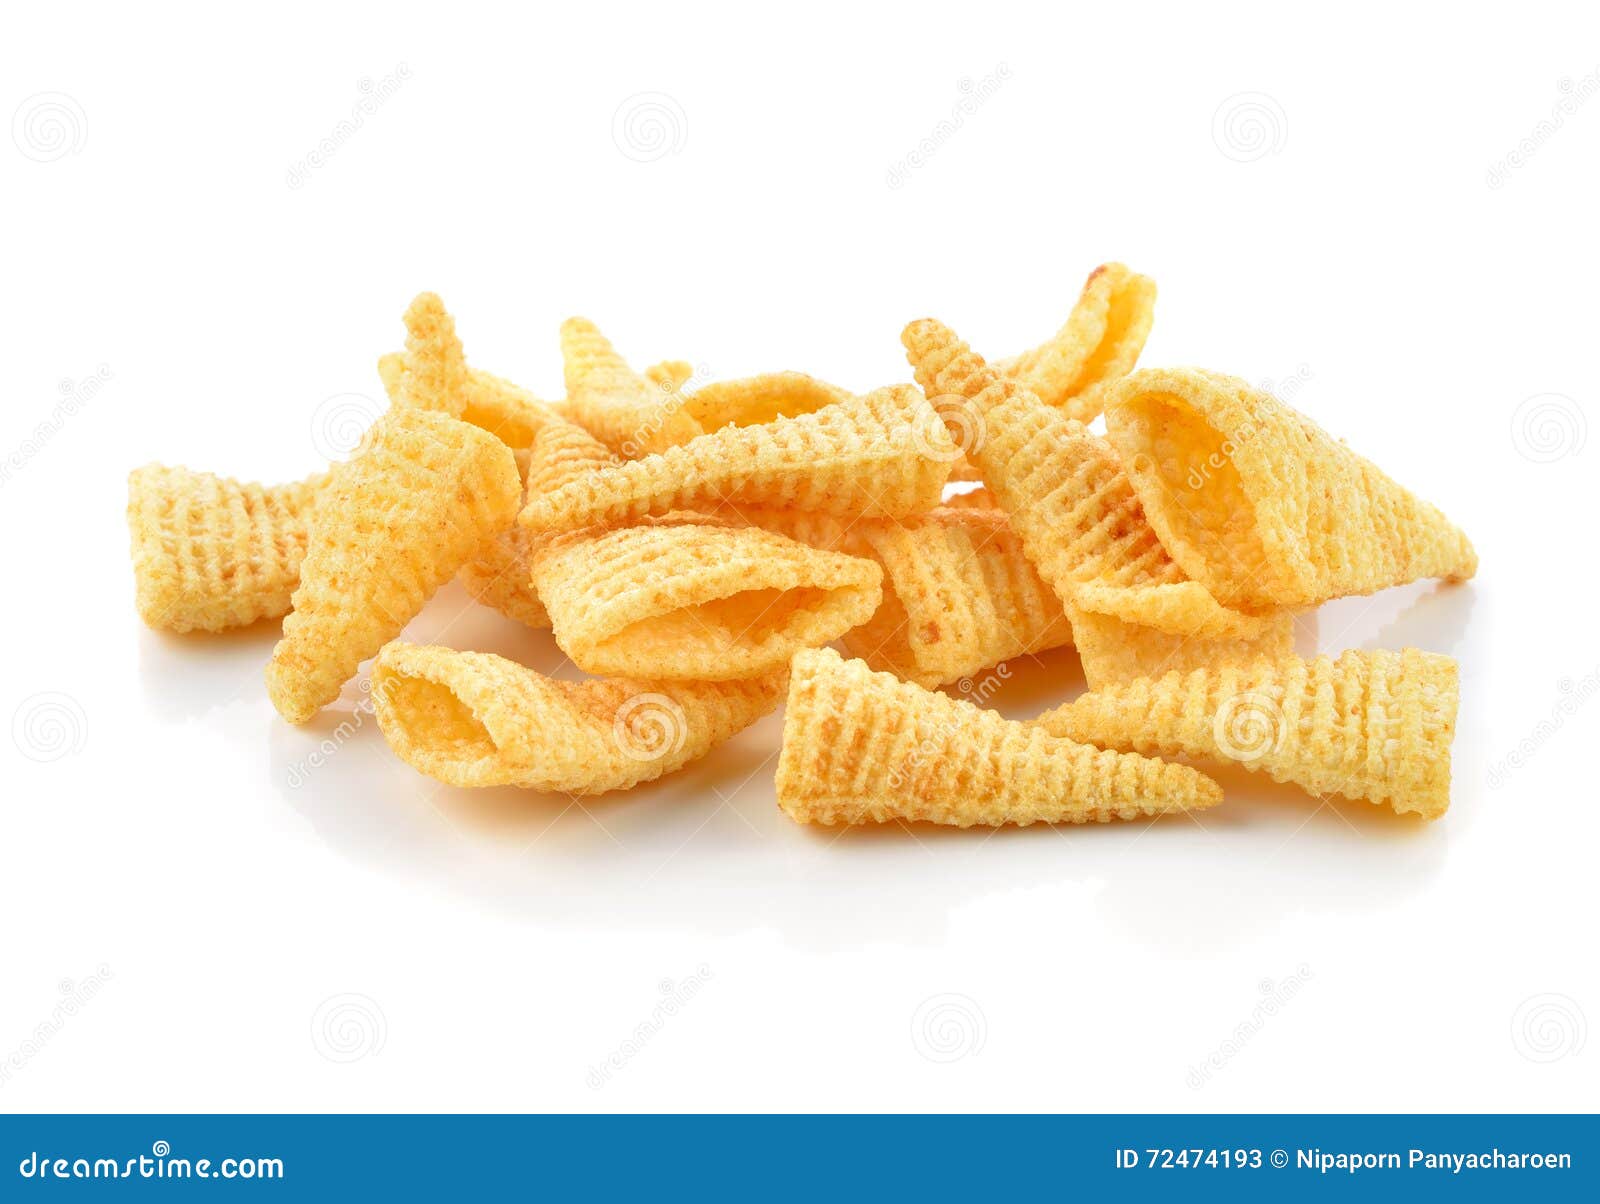 crunchy corn snacks